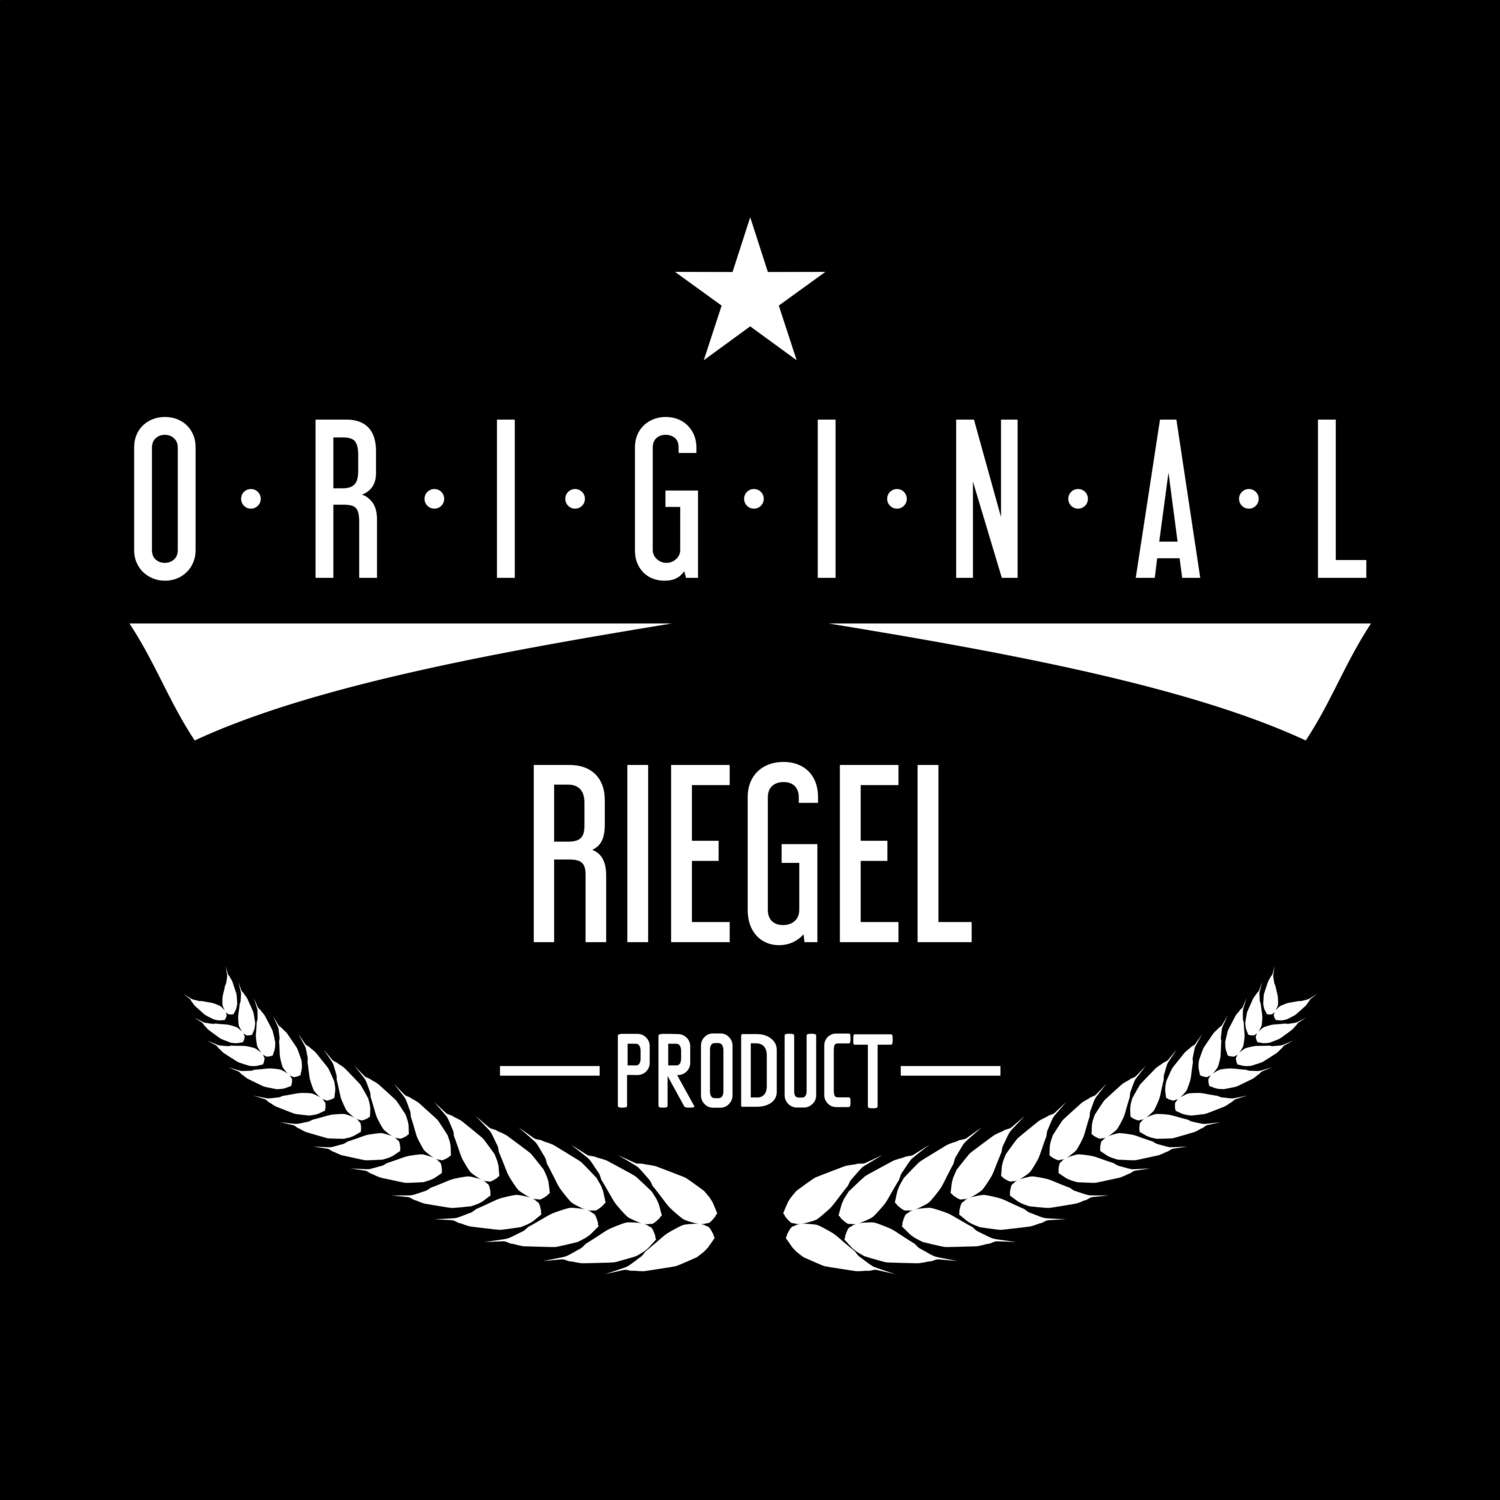 Riegel T-Shirt »Original Product«